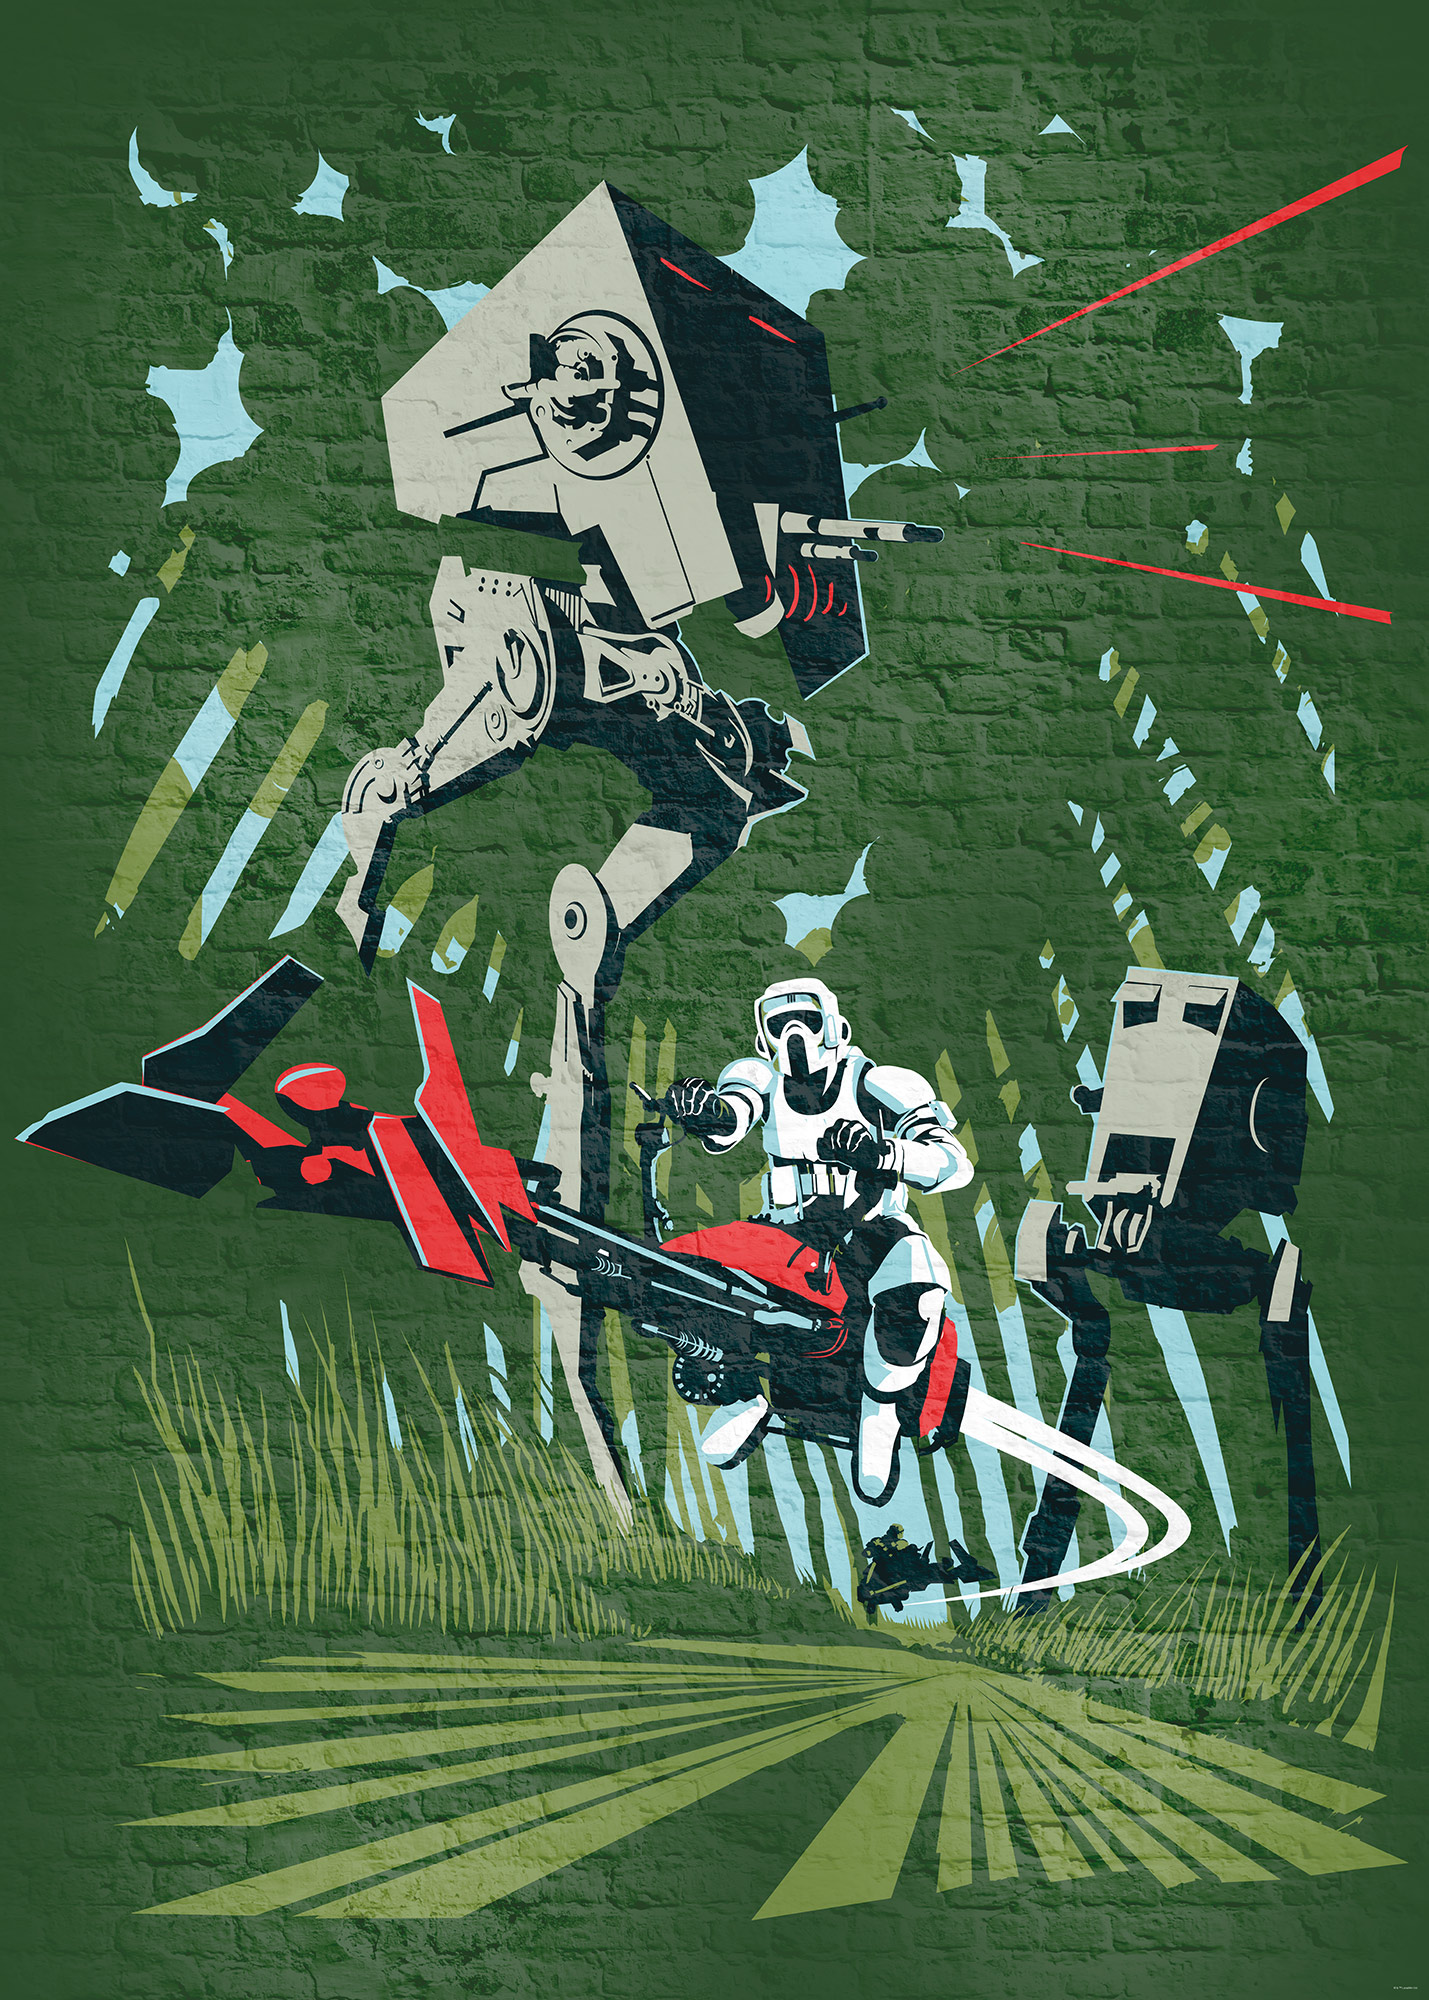 Photomurals  Digital print photomural Star Wars Poster Classic 1 by Komar